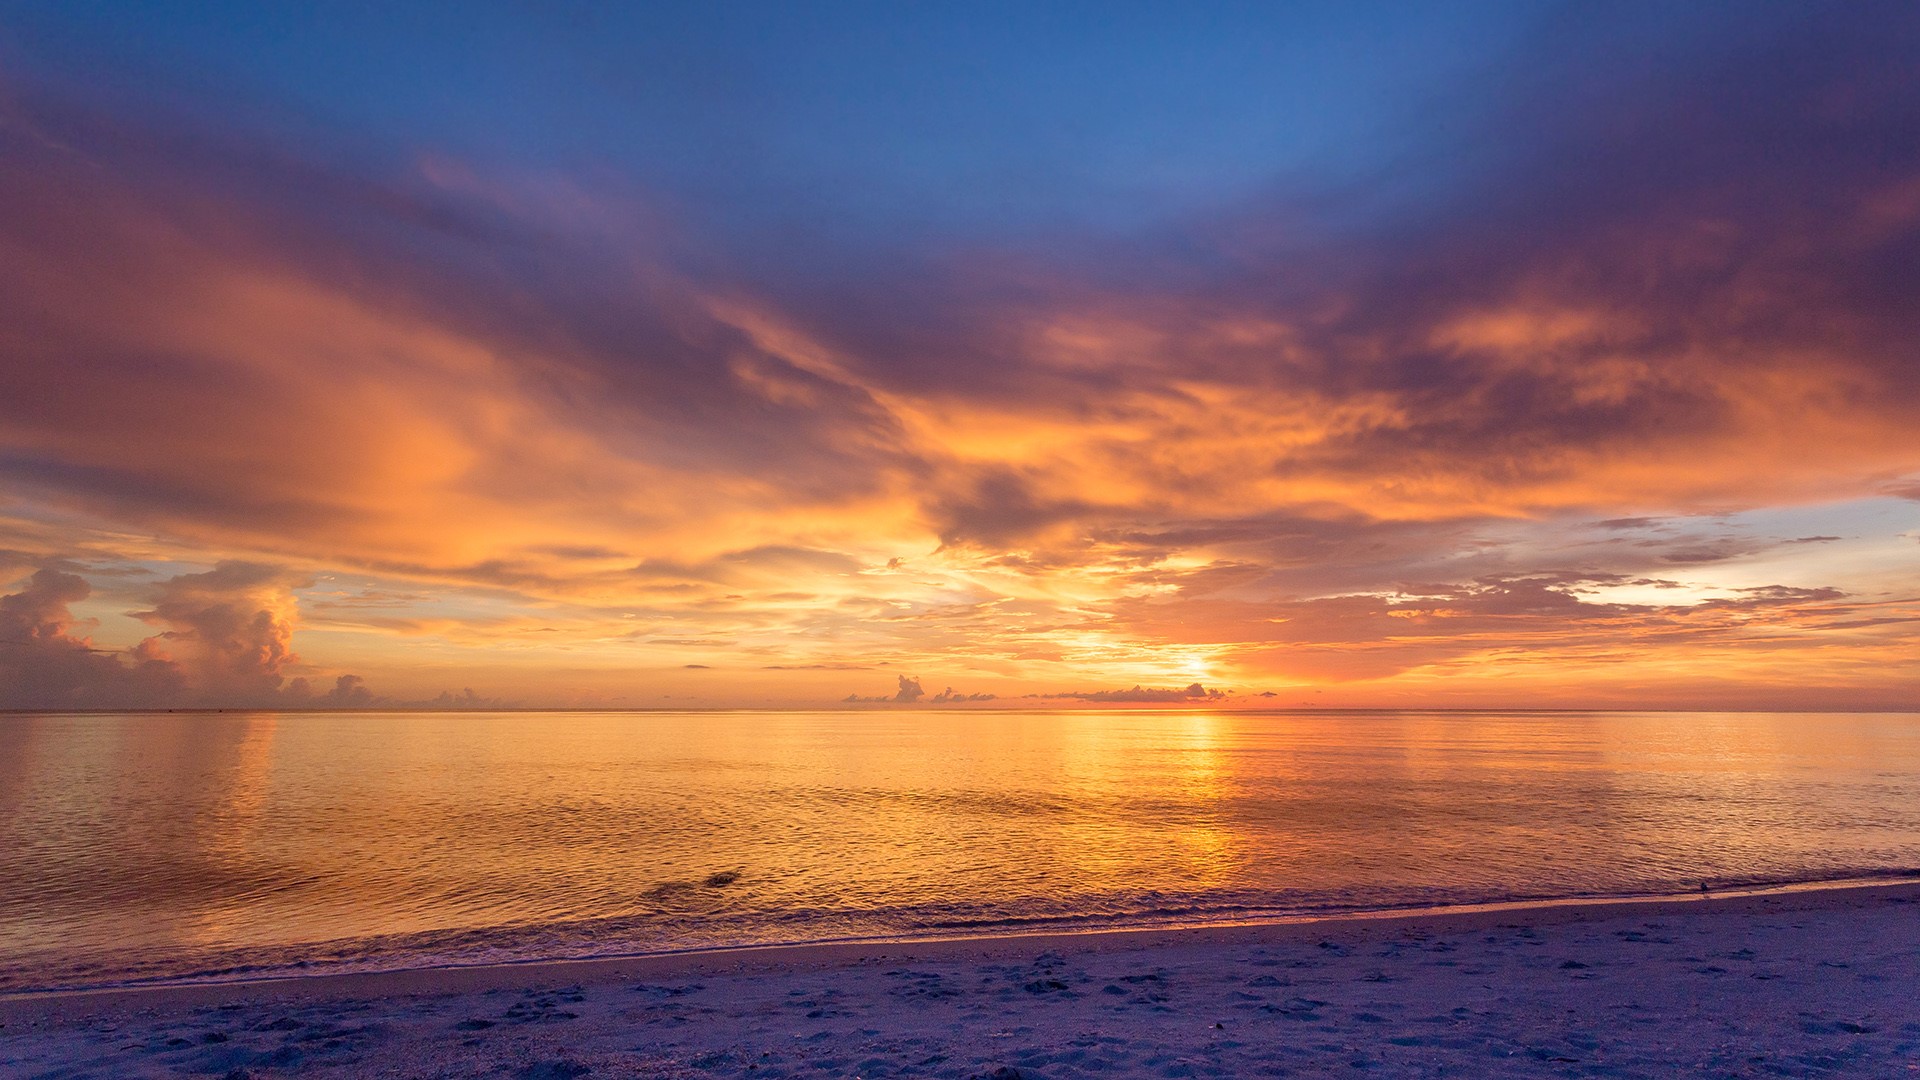 Naples beach amazing sunset and calm ocean, Florida, USA. Windows 10 Spotlight Image